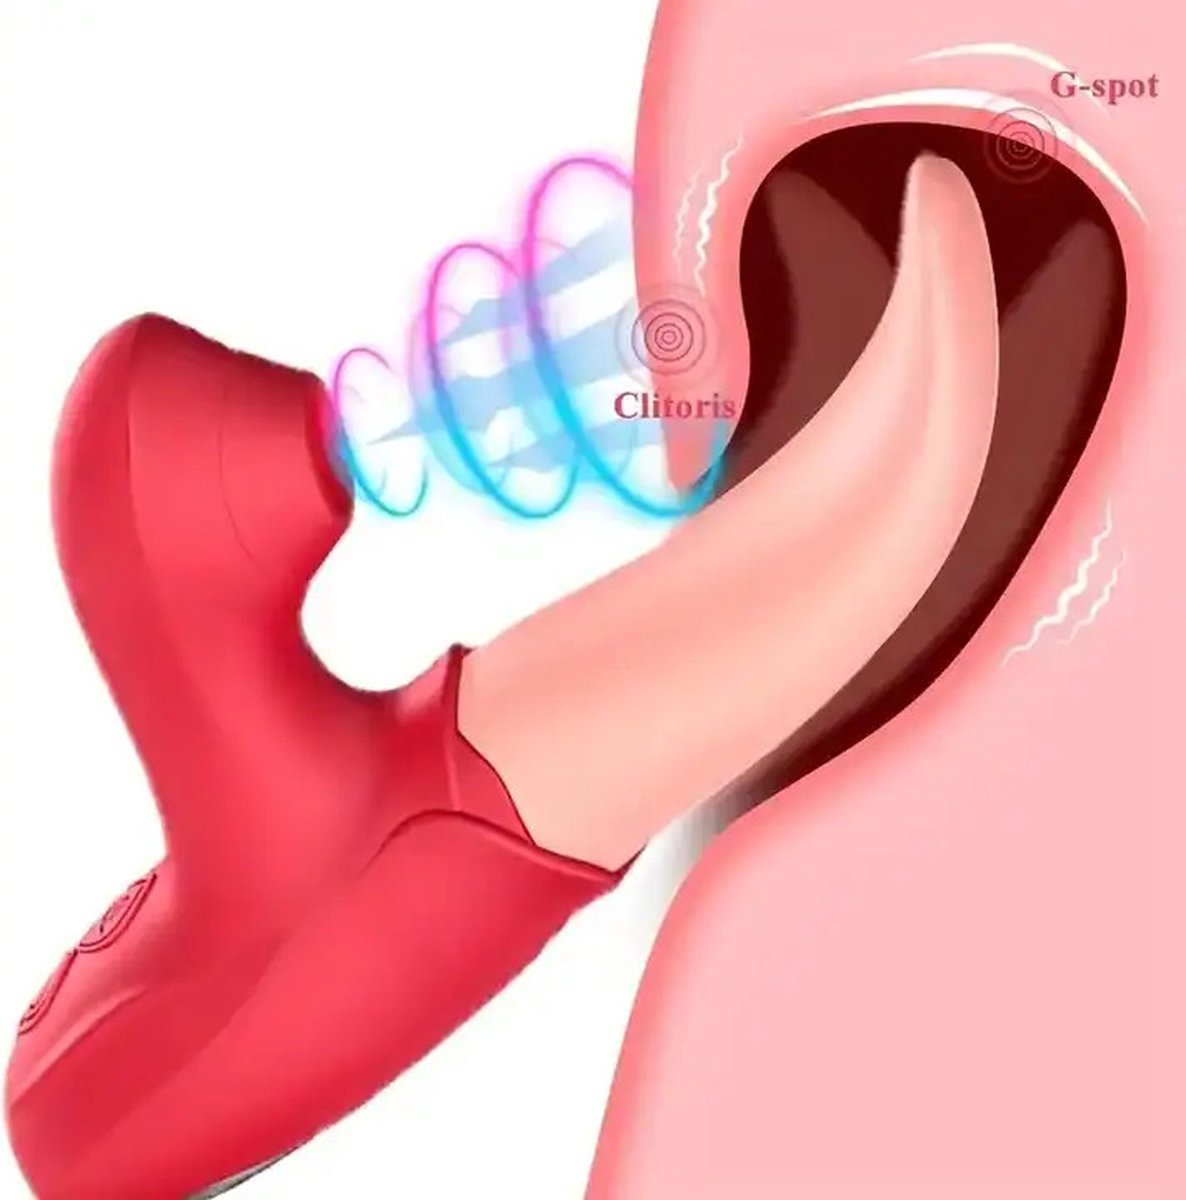 Tongvibrator - Vibrator - G Spot vibratie - Seks speeltje - Koppels - Vrouwen - Orgasme - Erotiek - G-spot Stimulatie - Clitoris - Bef vibrator - Seks - Krachtig - Zuigkracht - Clitoris stimulatie - Genot - Super orgasme